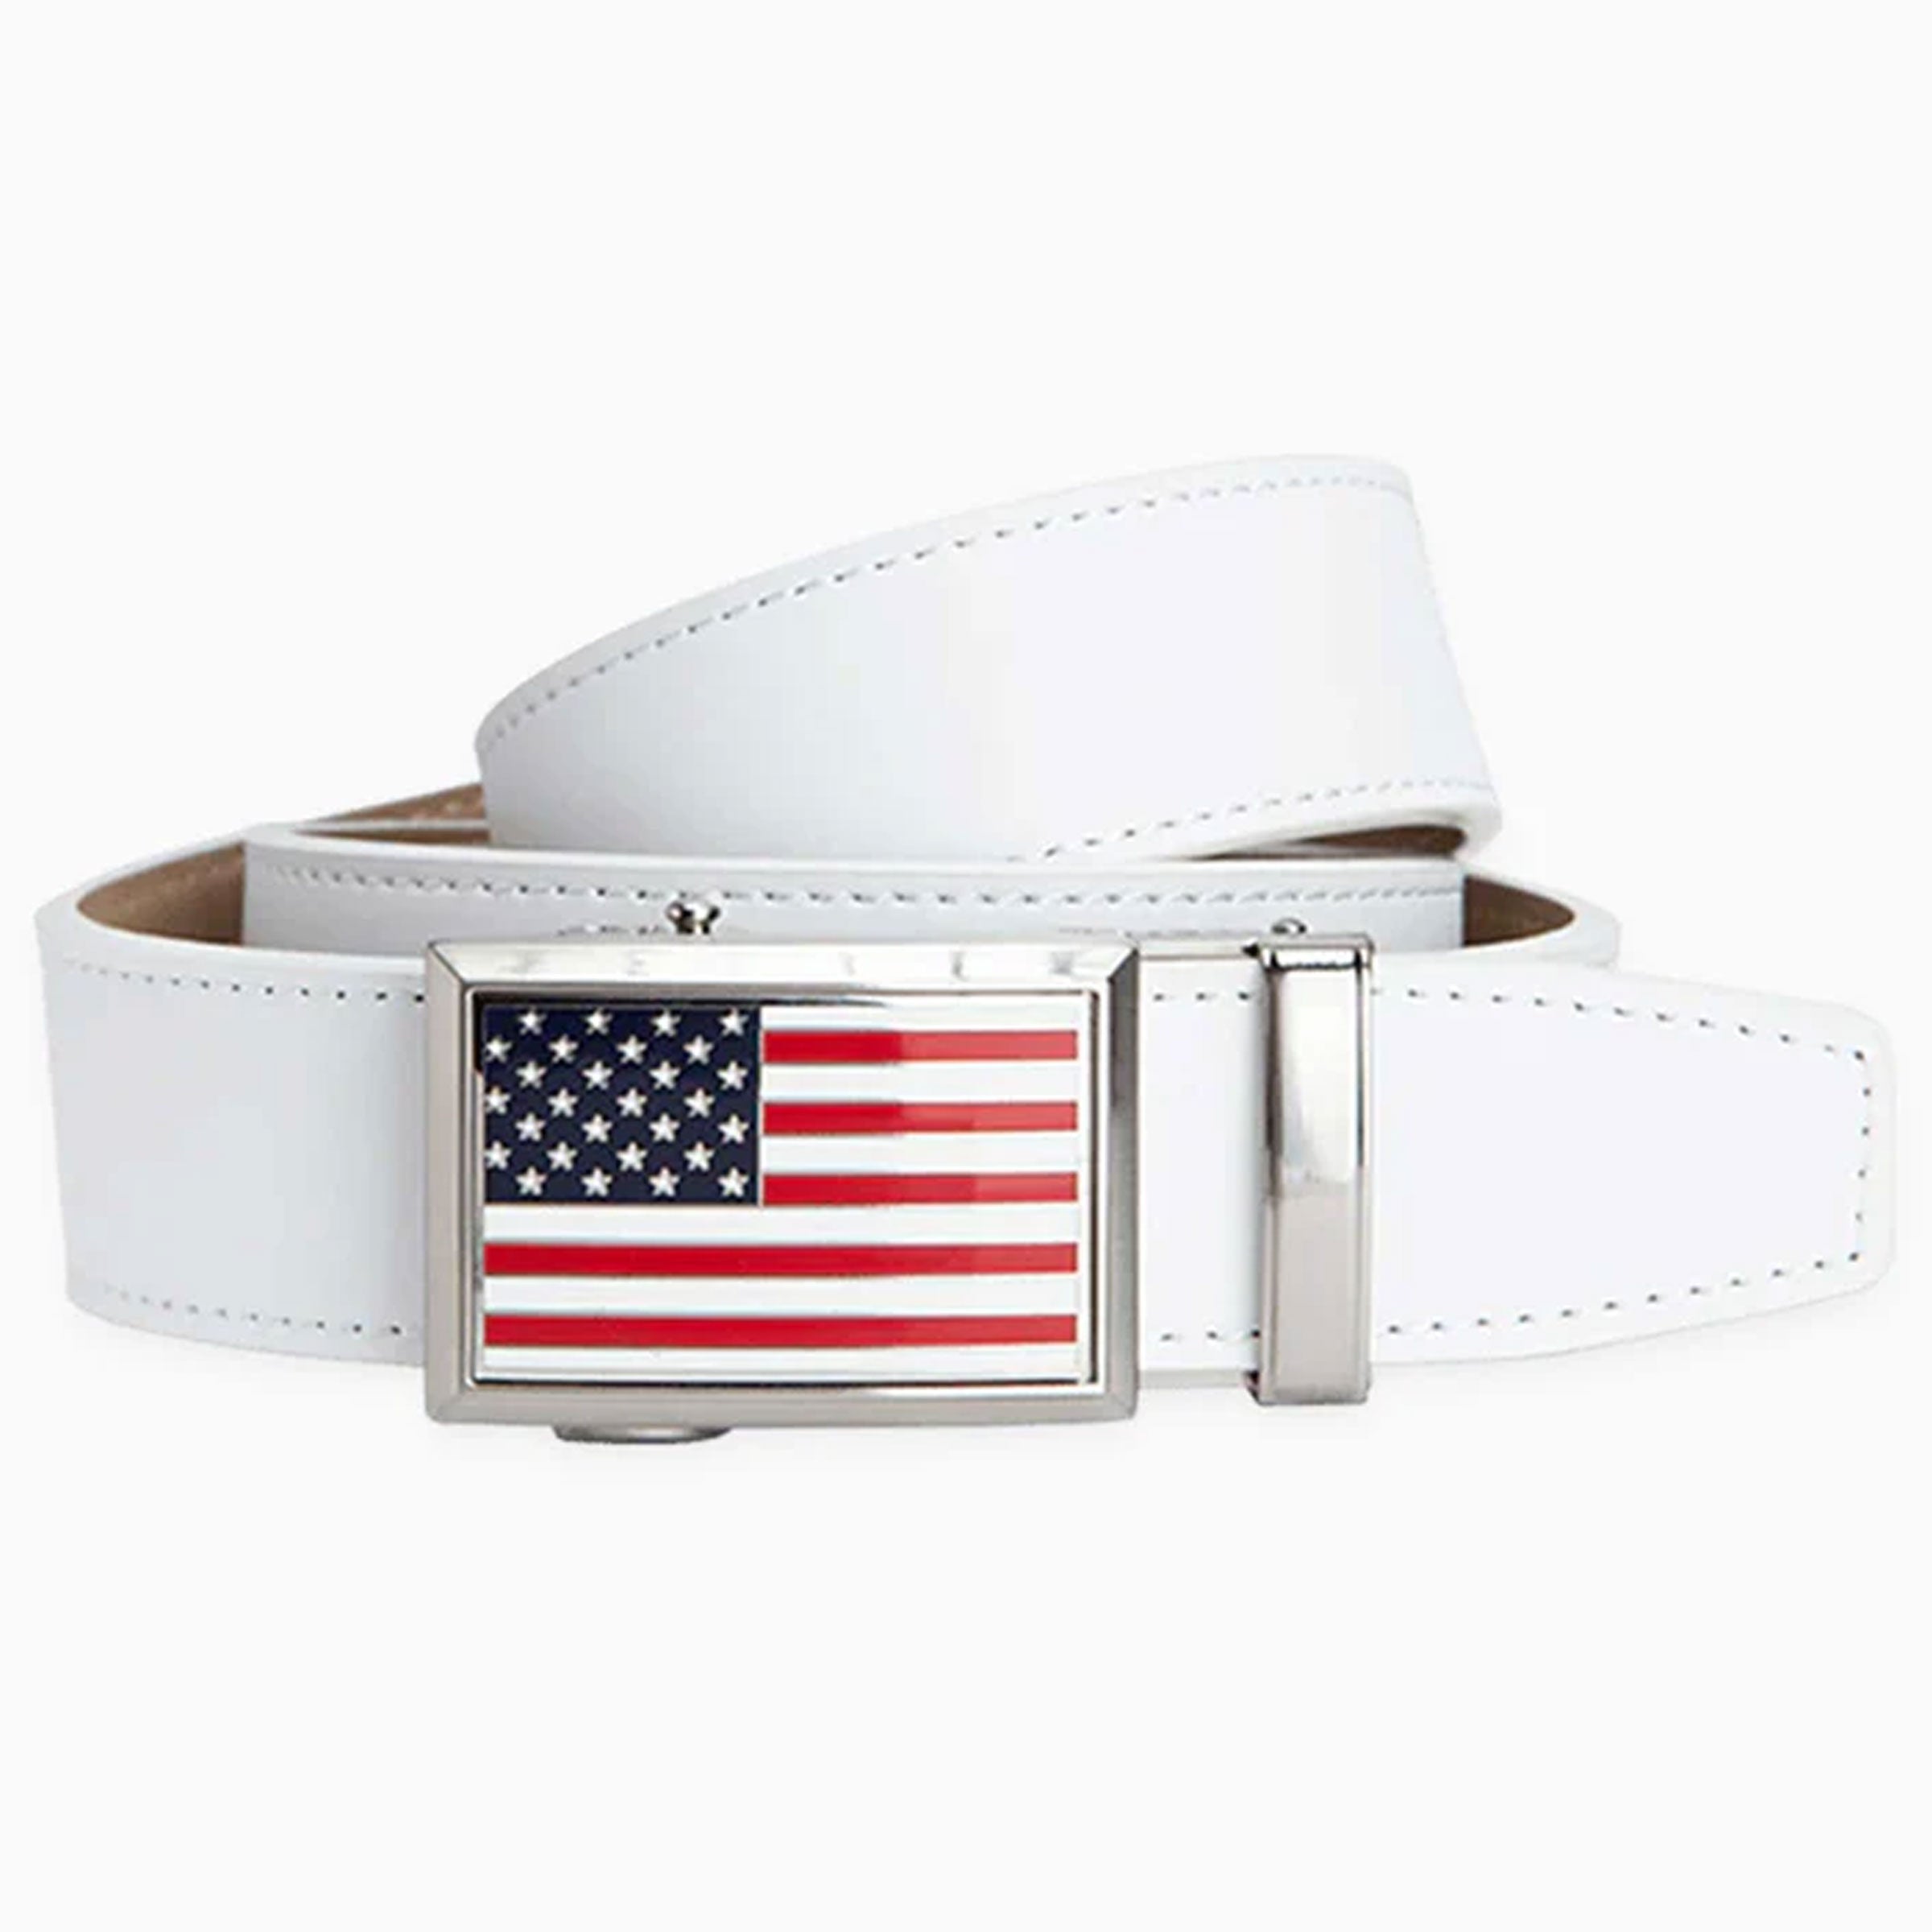 Heritage USA Flag, White Golf Belt 1.38" [35mm]